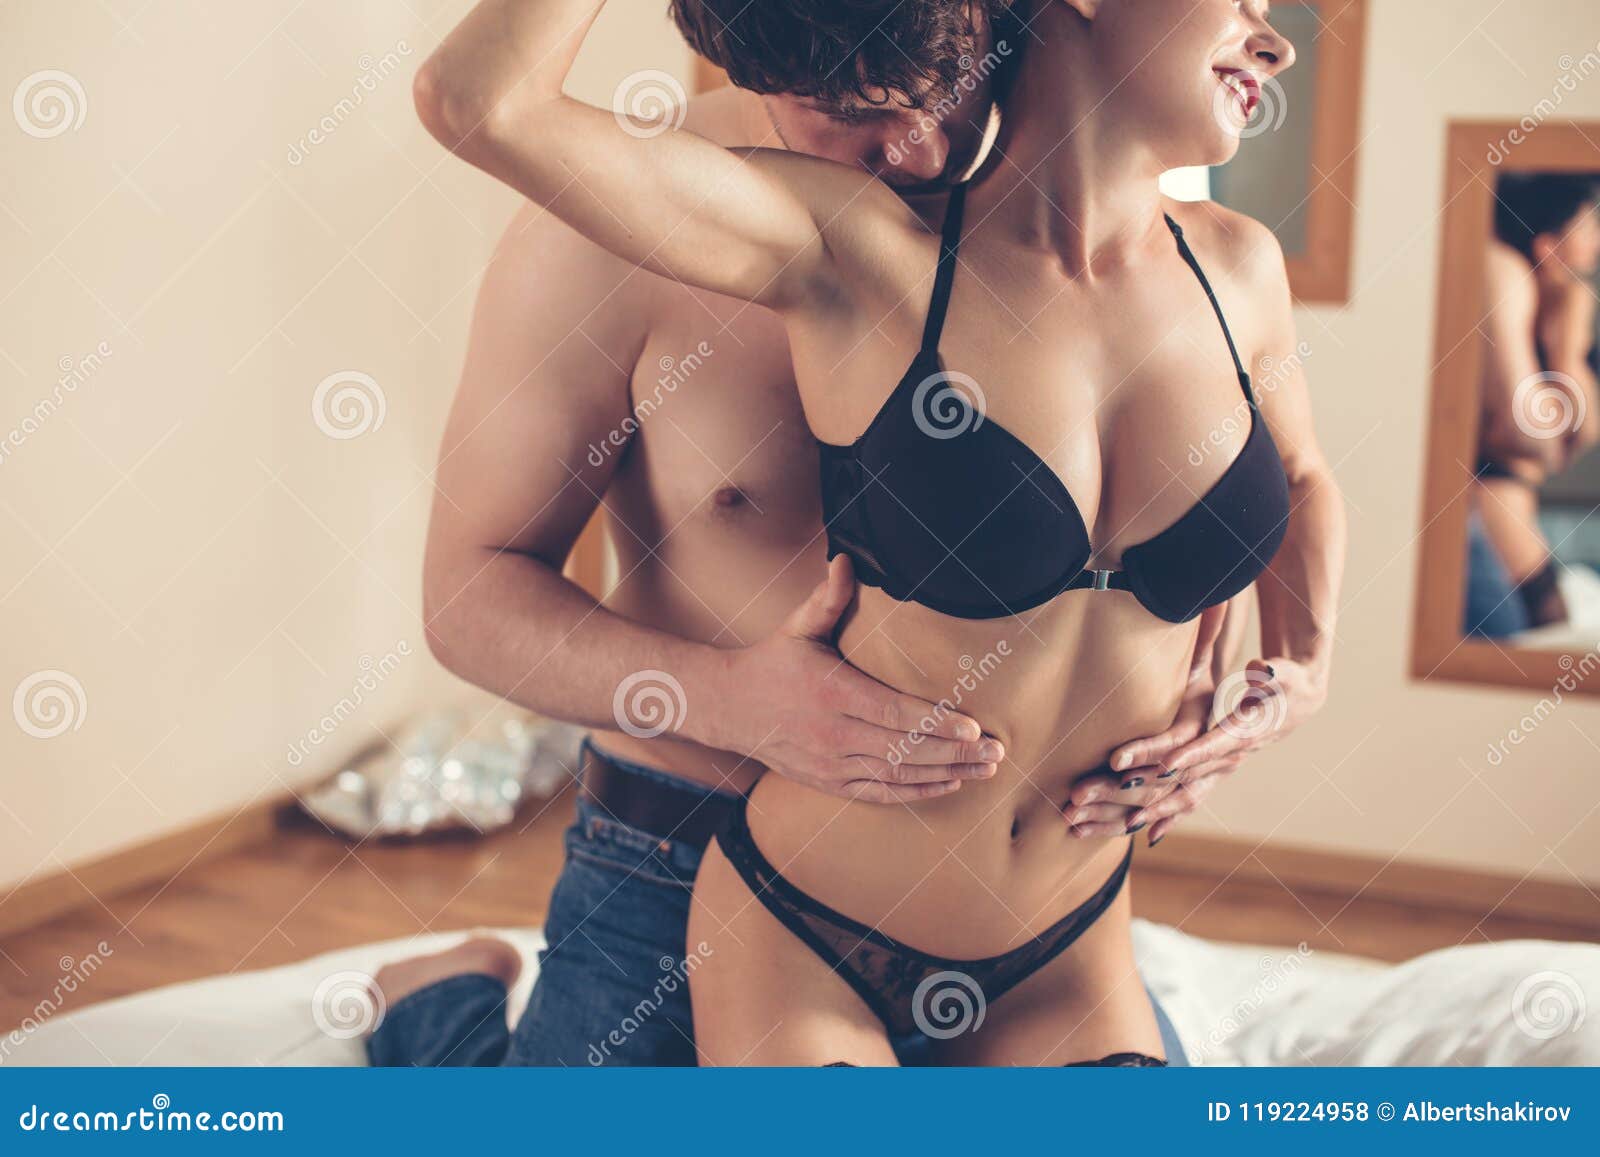 chris benamati add photo hot women having intercourse